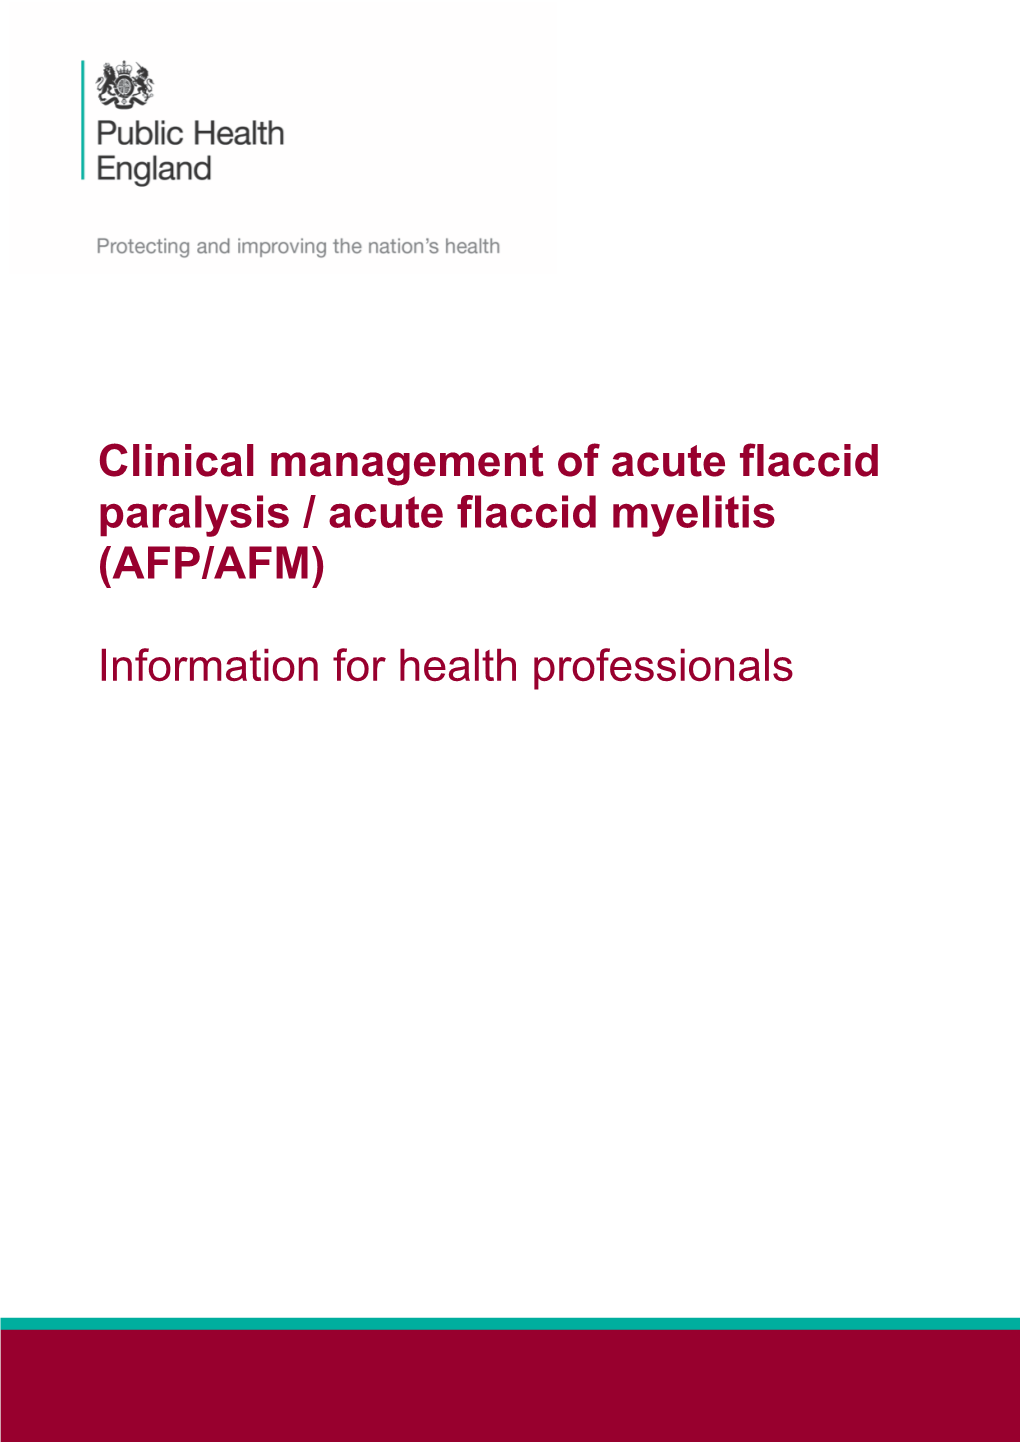 Clinical Management of Acute Flaccid Paralysis / Acute Flaccid Myelitis (AFP/AFM)